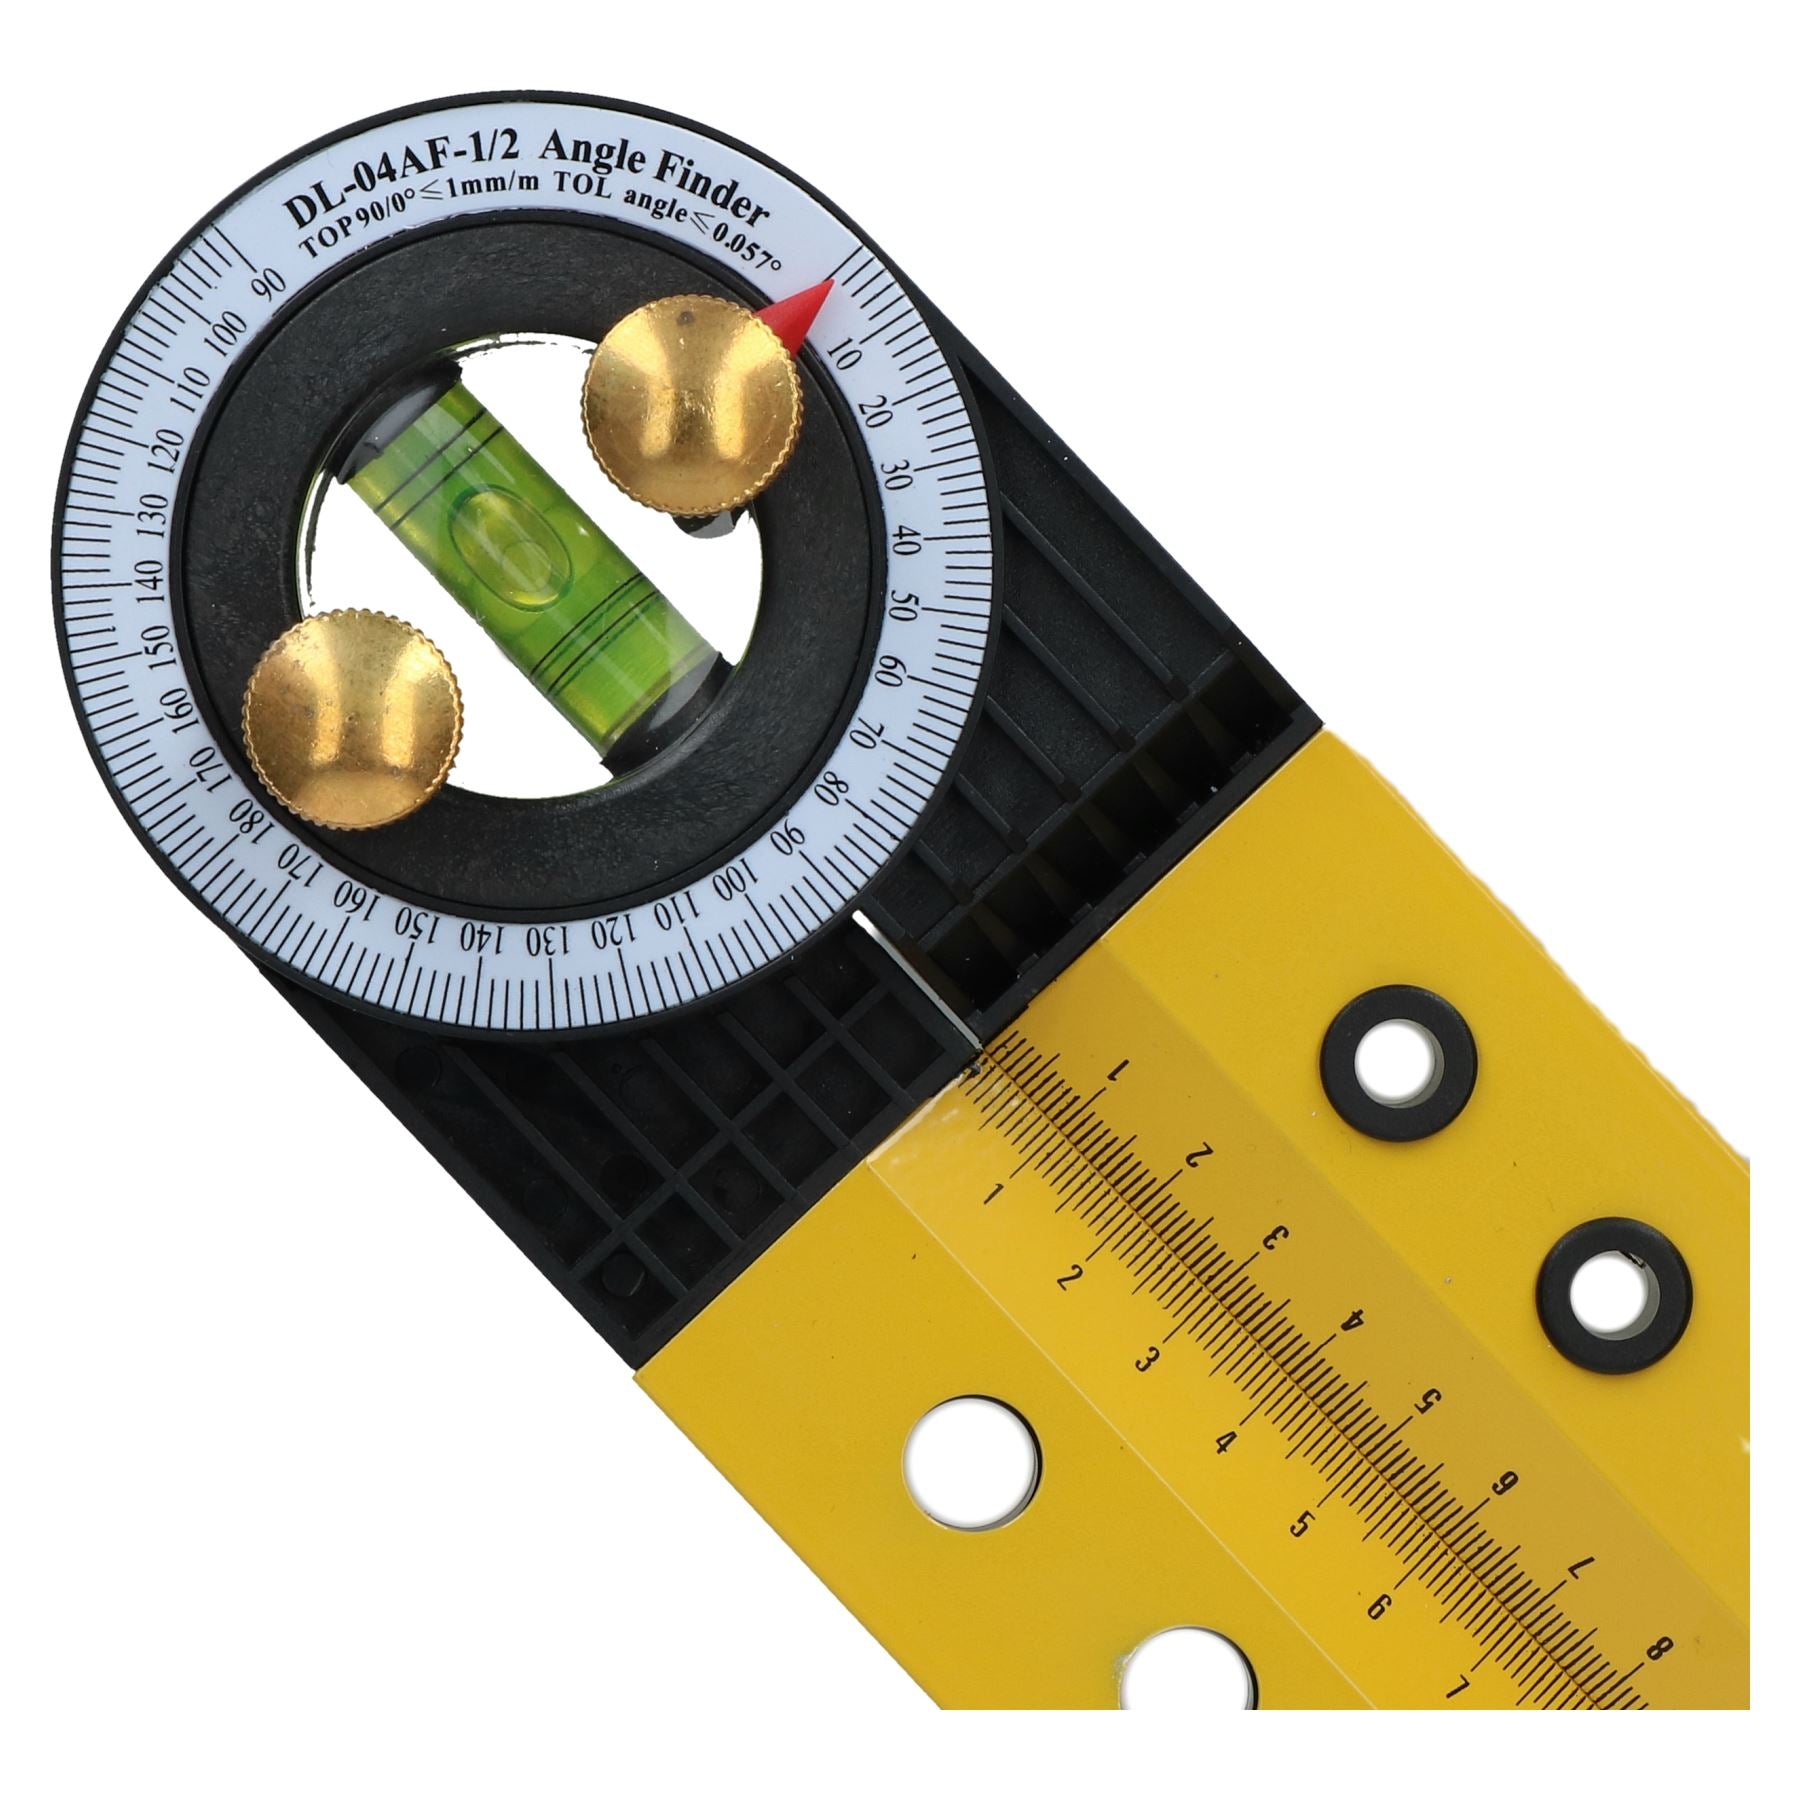 24" / 600mm Multi Angle Ruler Protractor Spirit Level Scaffolding Builders Level